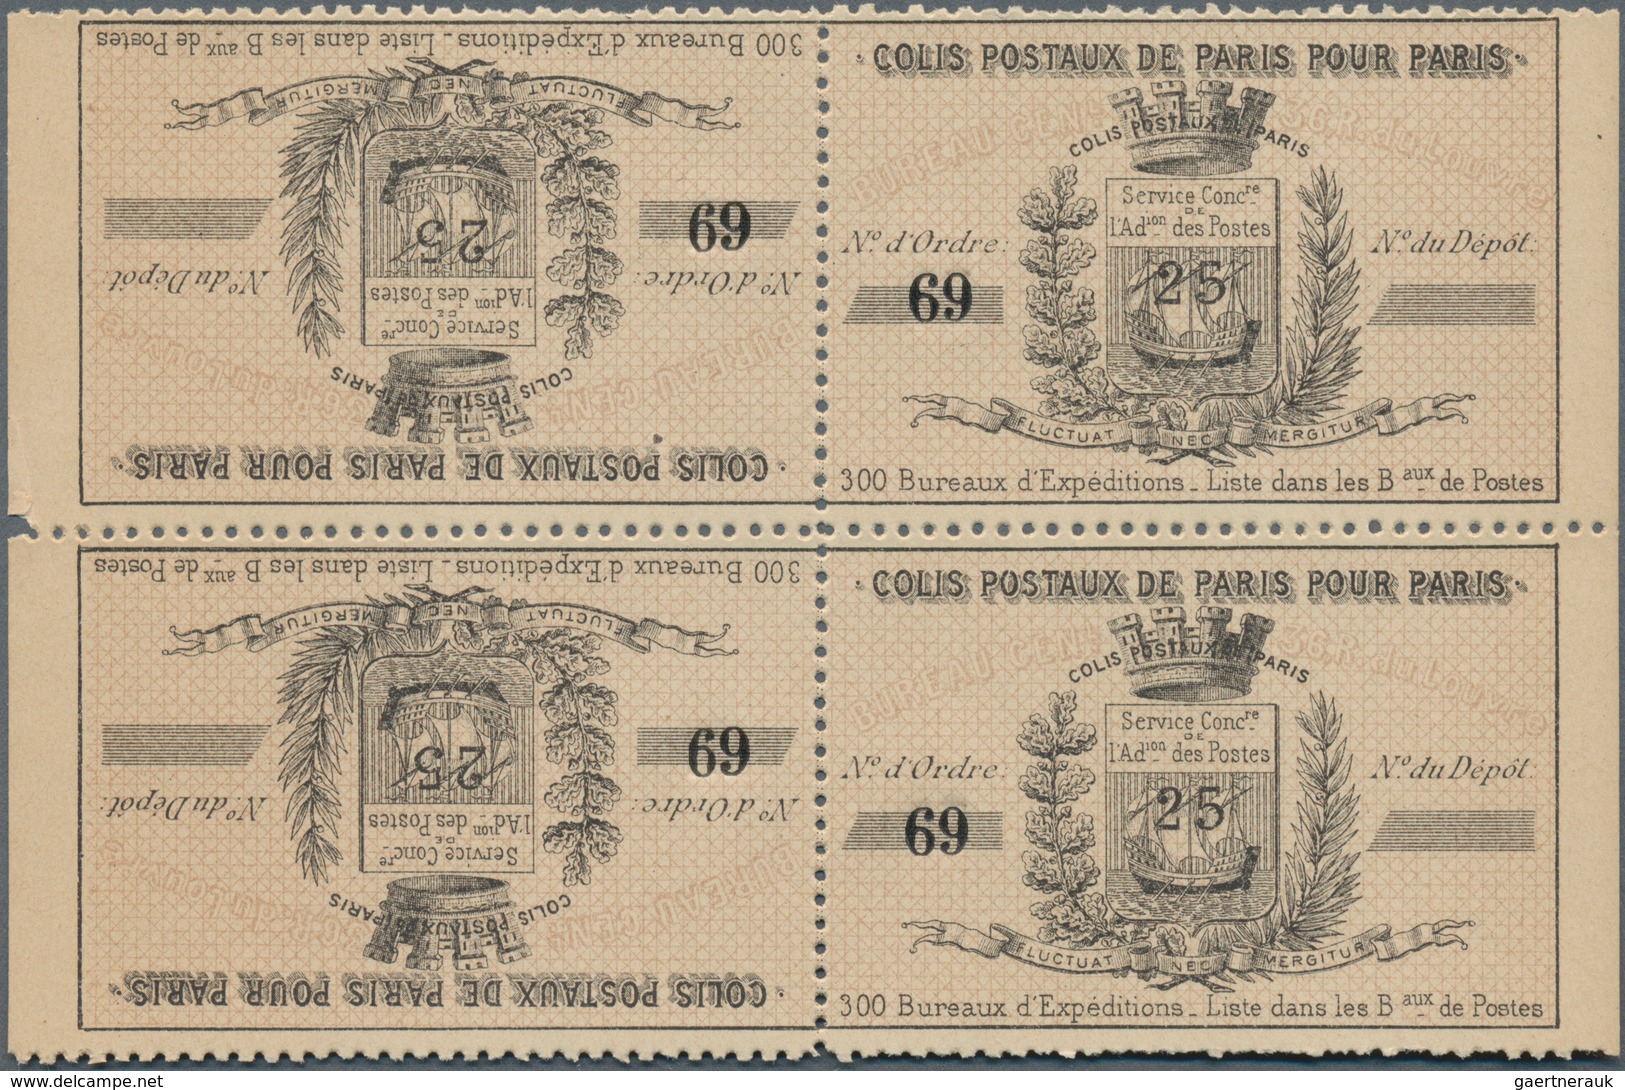 Frankreich - Postpaketmarken: 1901/1945 (ca.), accumulation with hundreds of stamps incl. a nice par